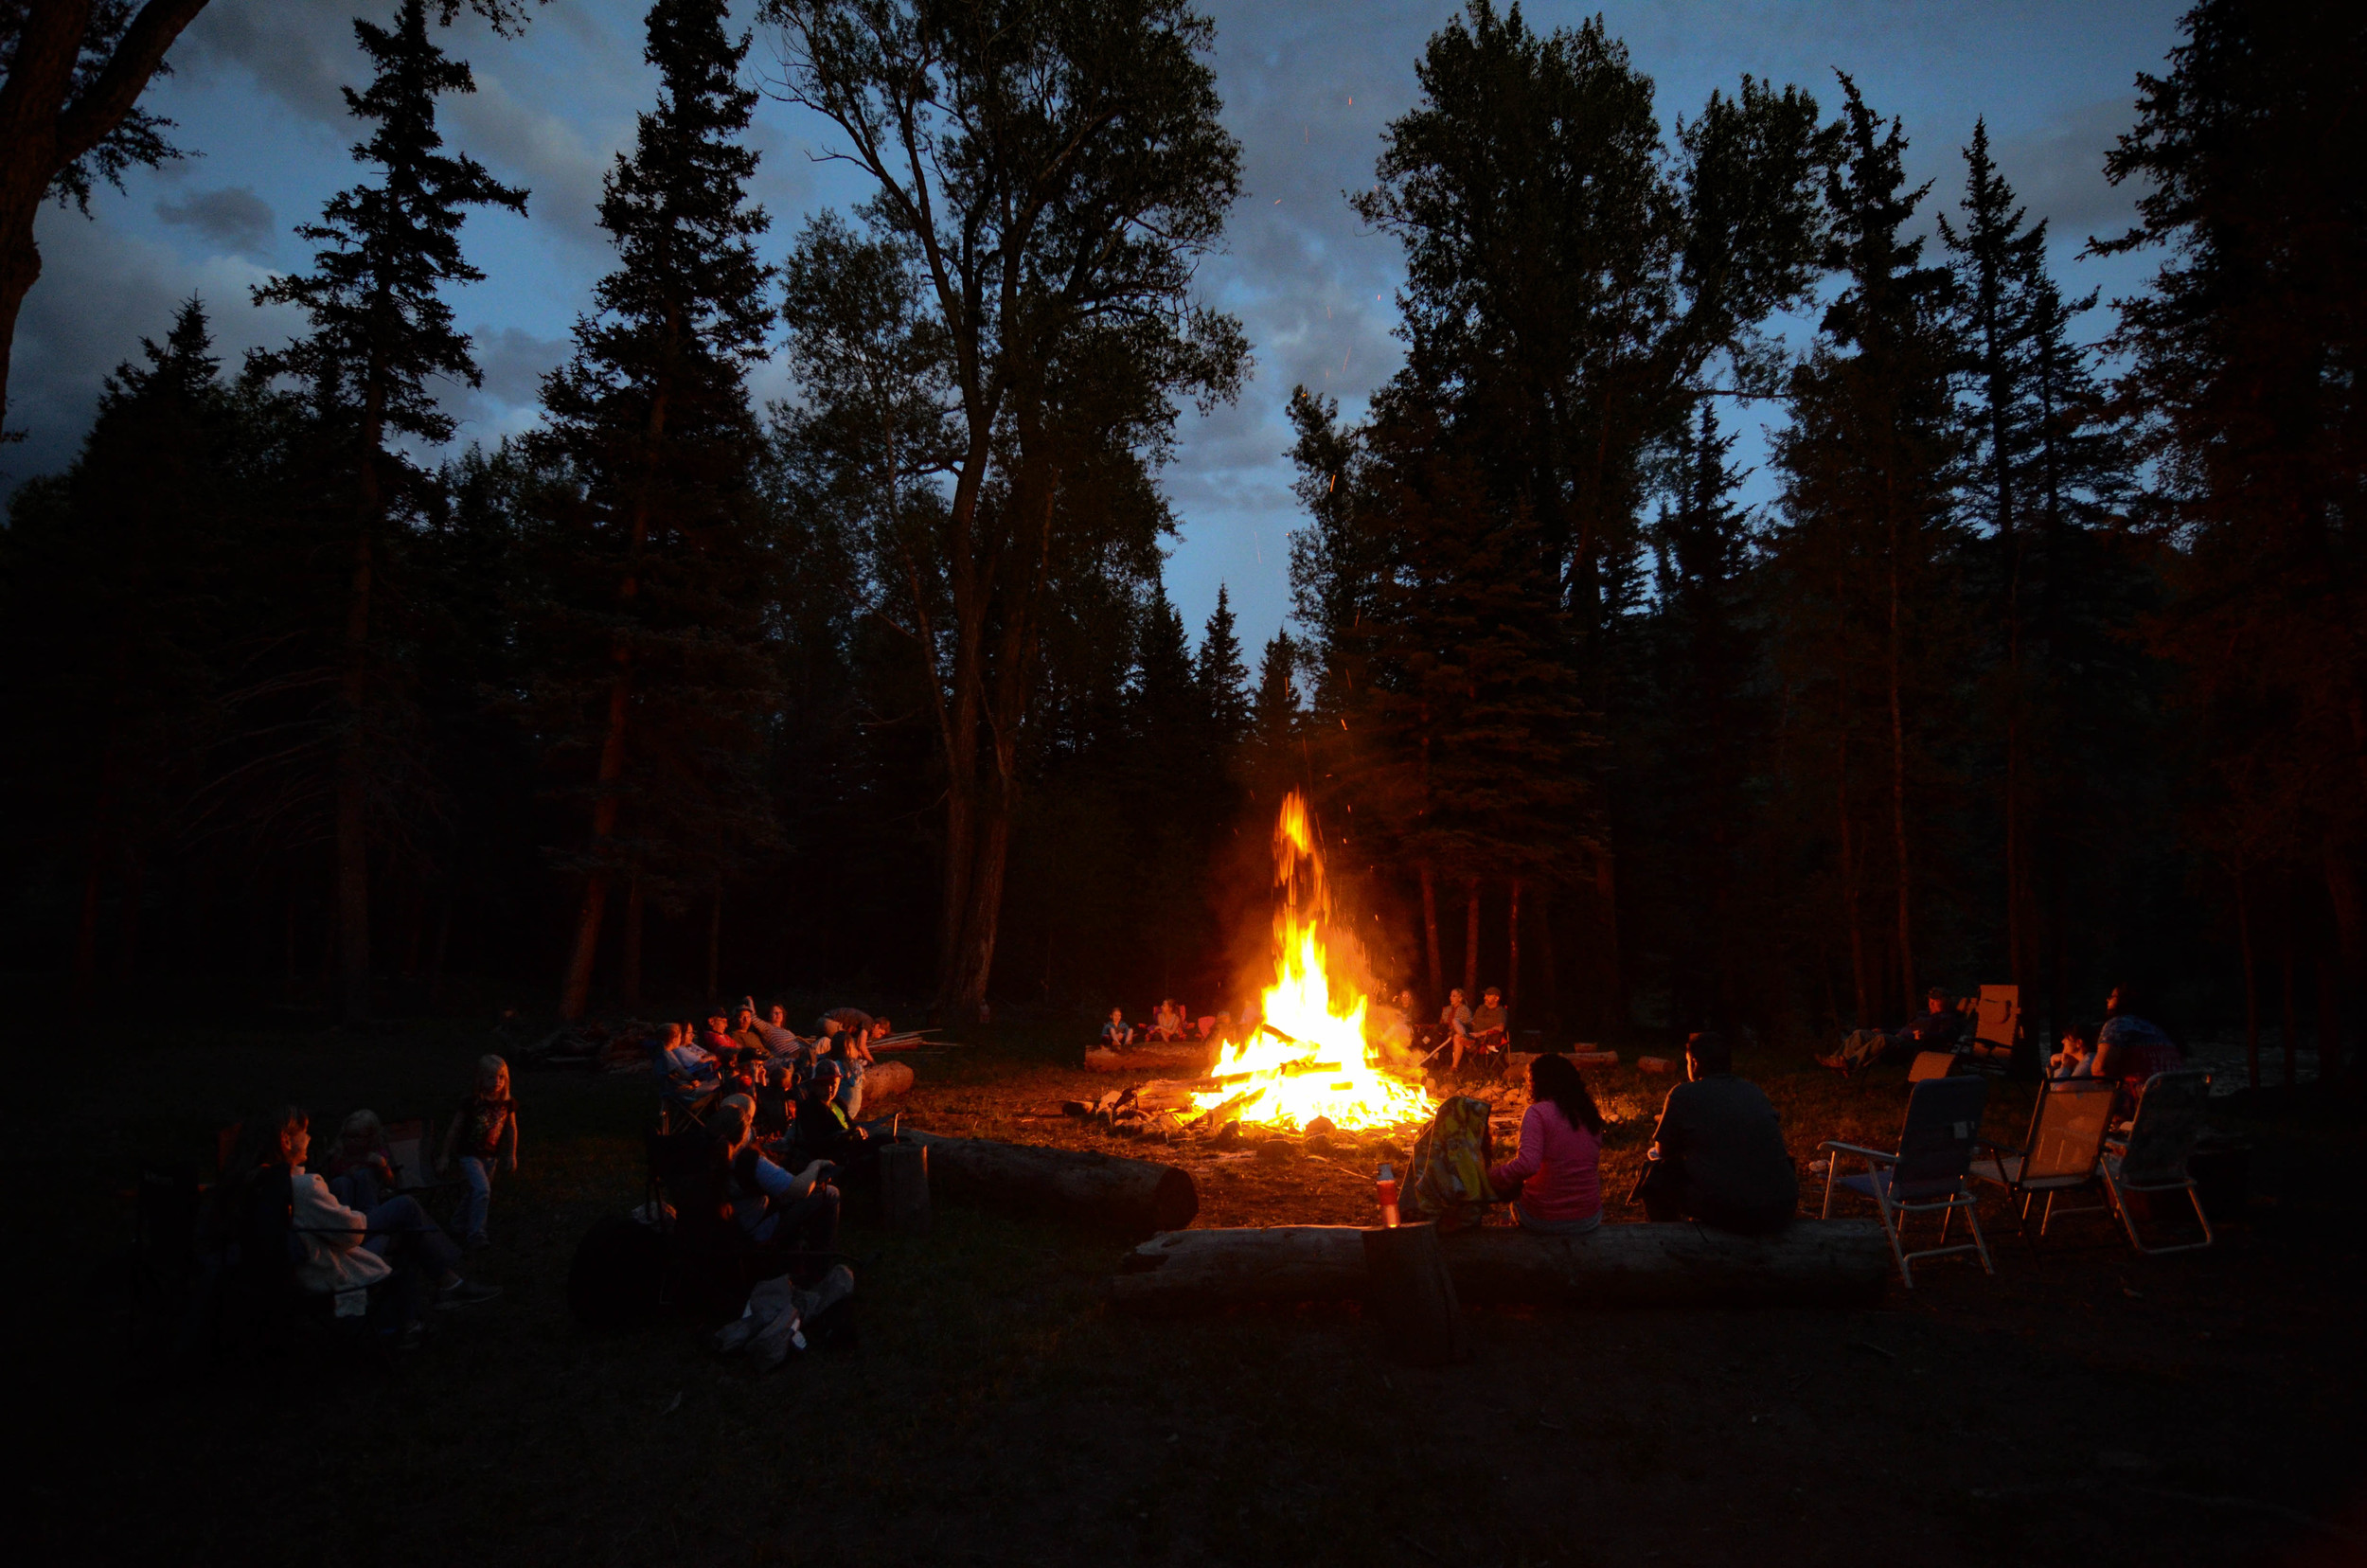 Fellowship around the campfire